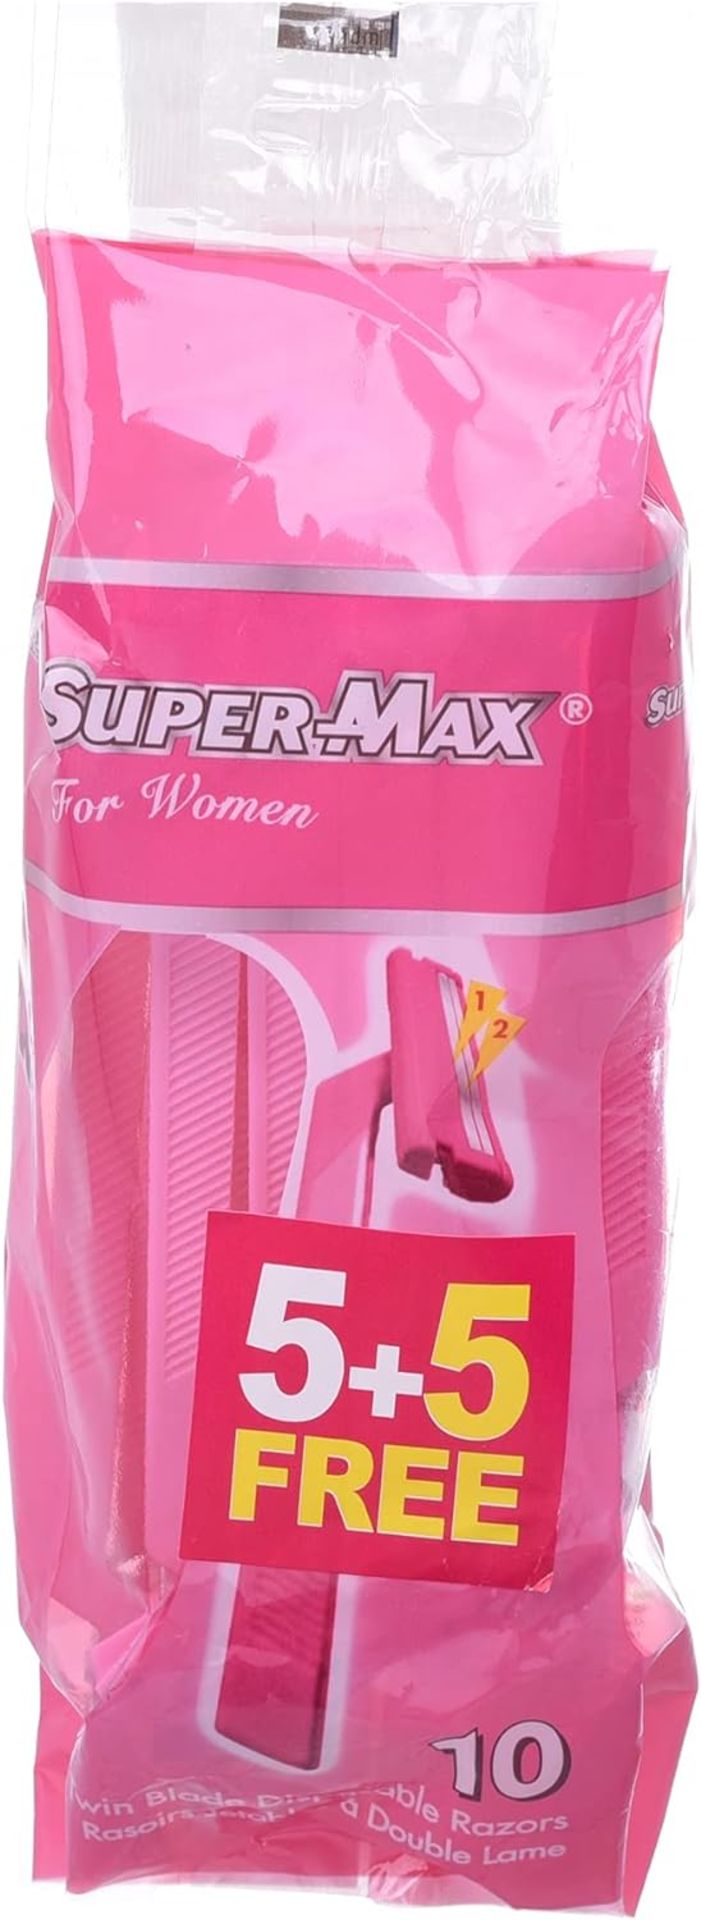 60 X BRAND NEW PACKS OF 10 SUPERMAX DISPOSABLE RAZORS FOR WOMEN R16-6